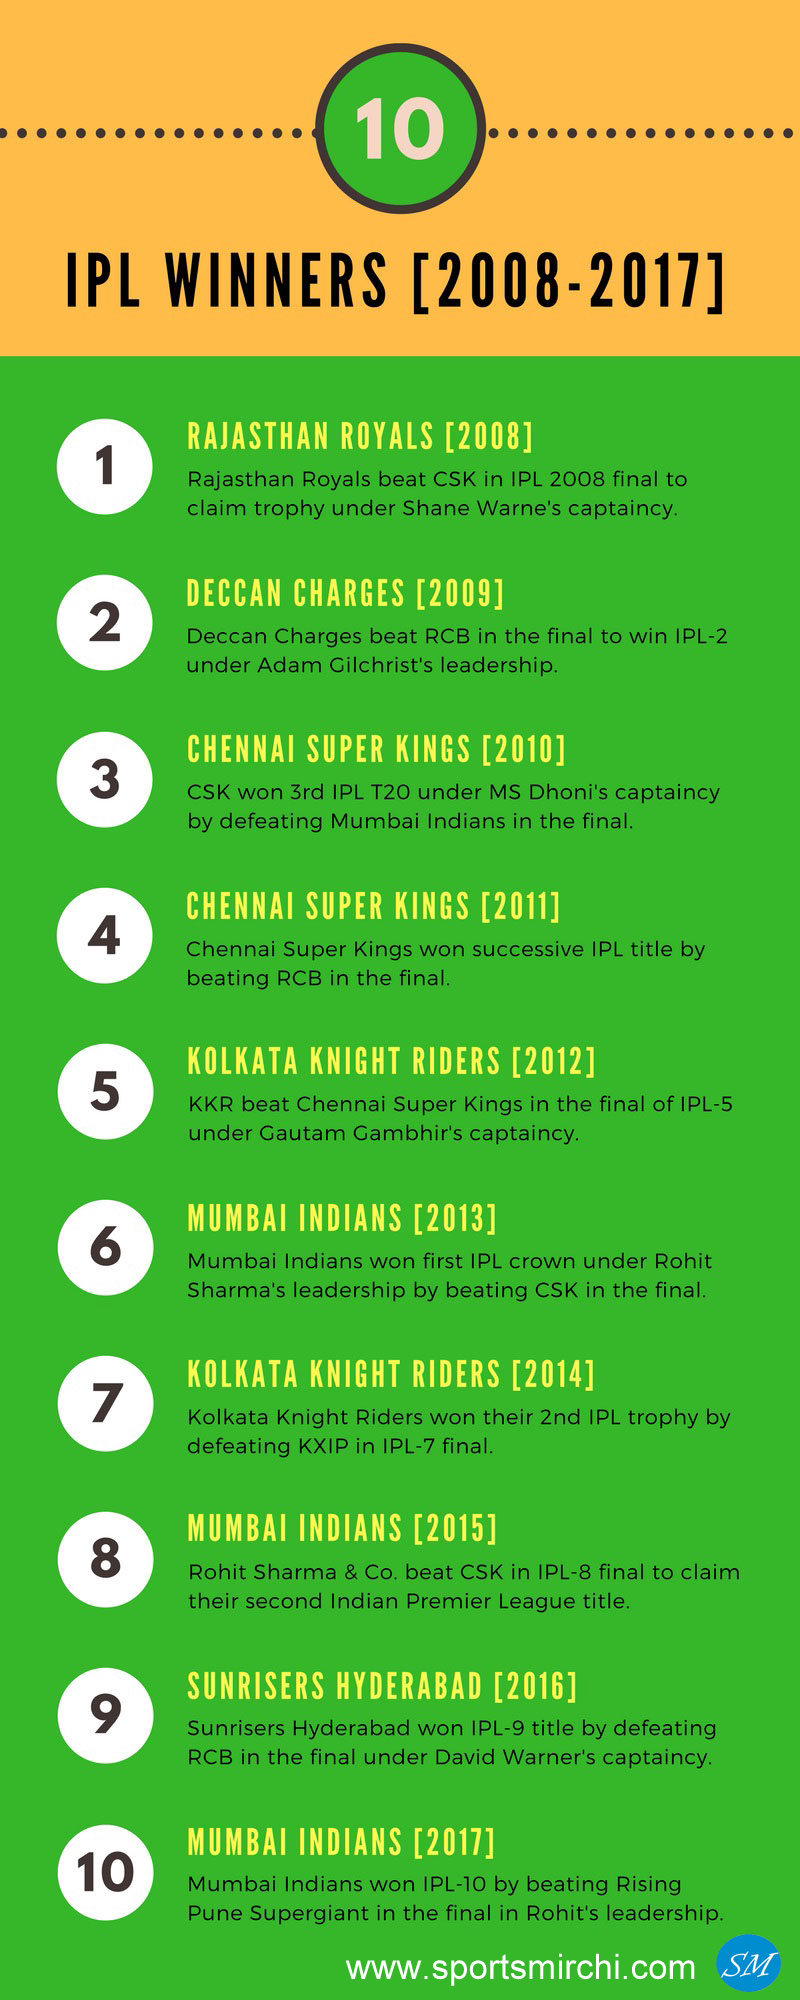 IPL Winners 2008 to 2017 Infographic 